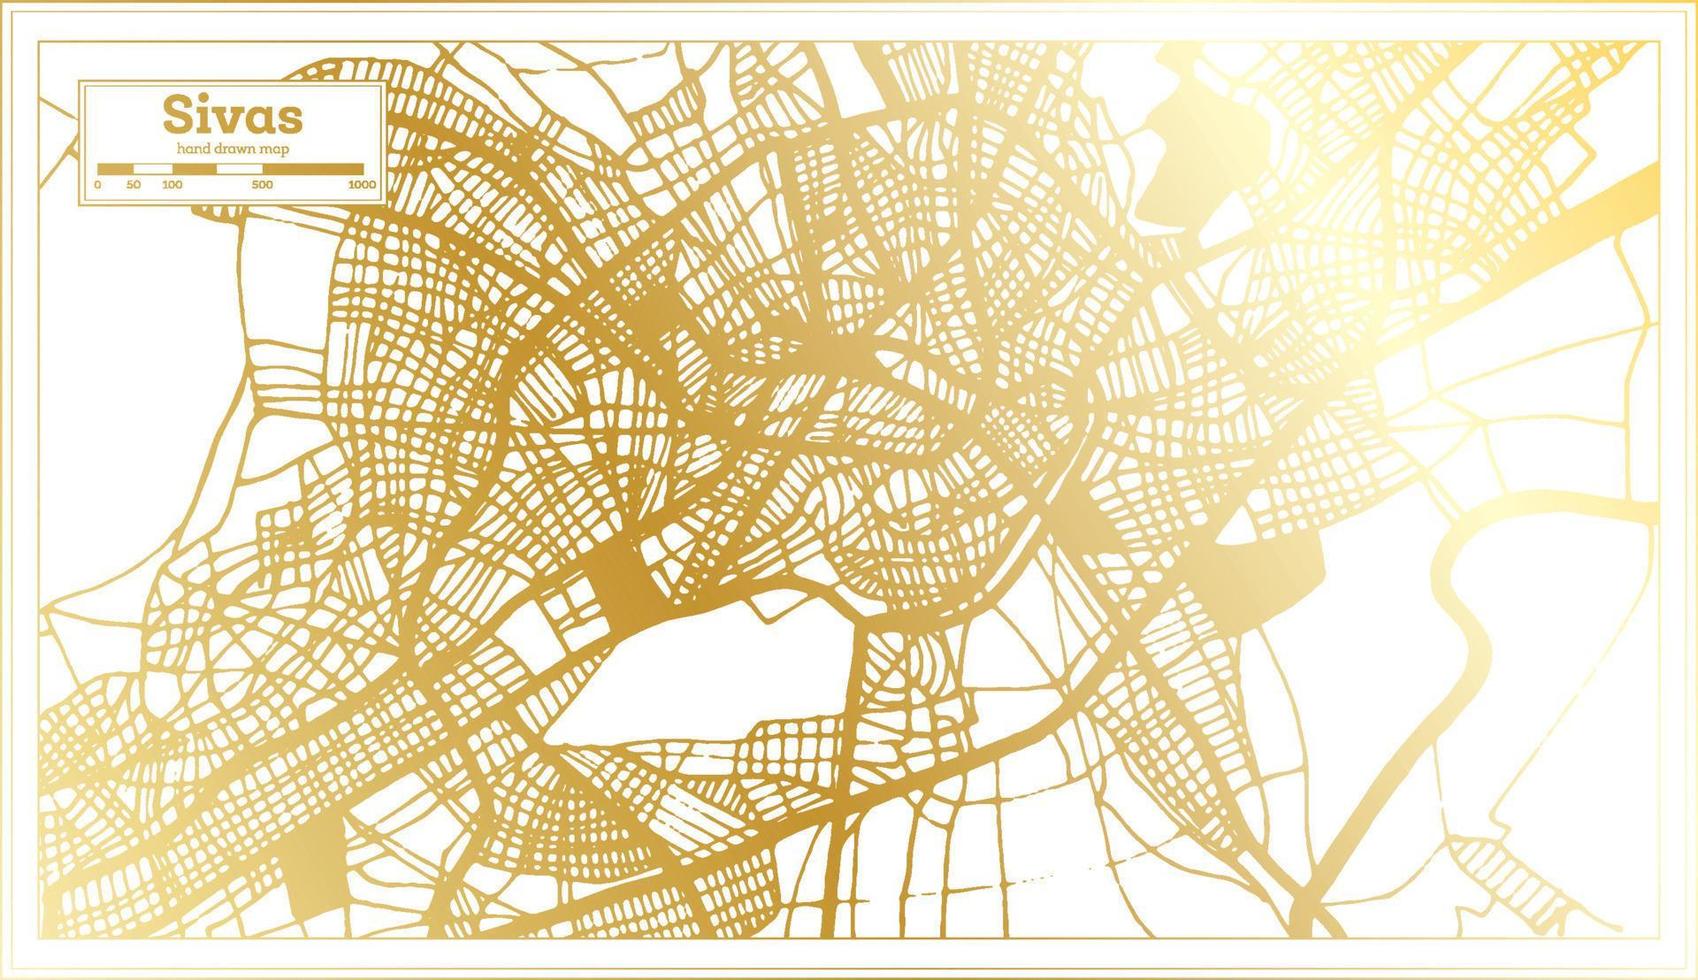 Sivas Türkei Stadtplan im Retro-Stil in goldener Farbe. Übersichtskarte. vektor